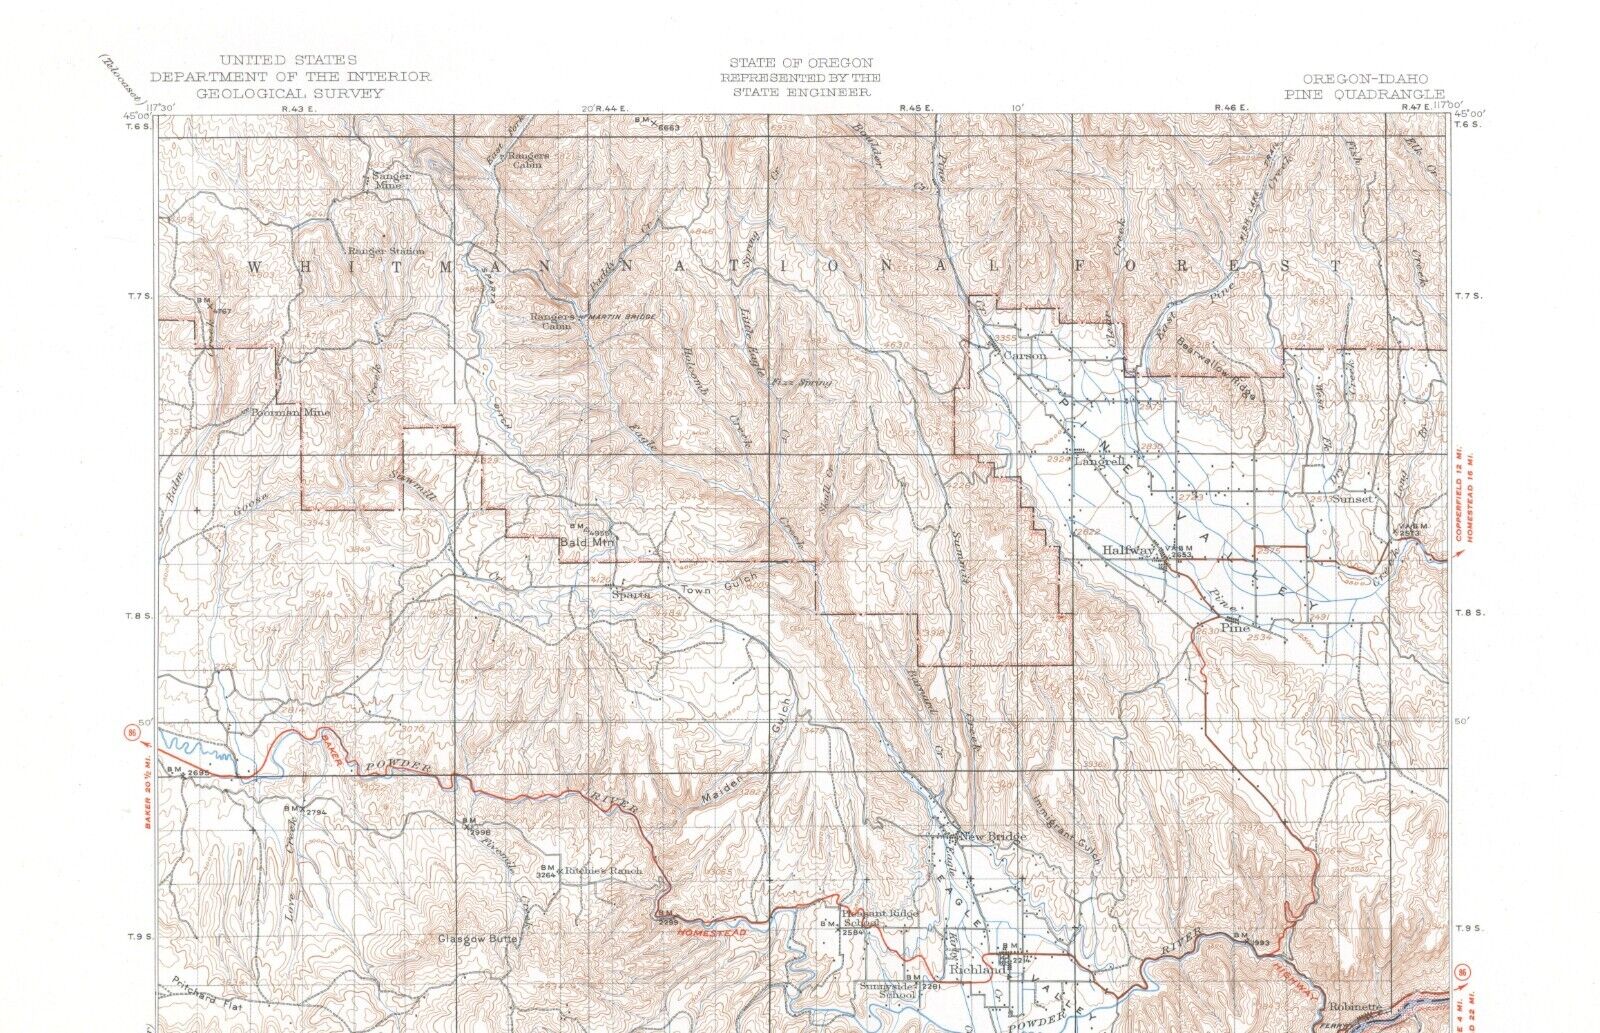 Pine Quadrangle Oregon-Idaho 1915 Map USGS 1:125,000 Scale 30 Minute Topographic